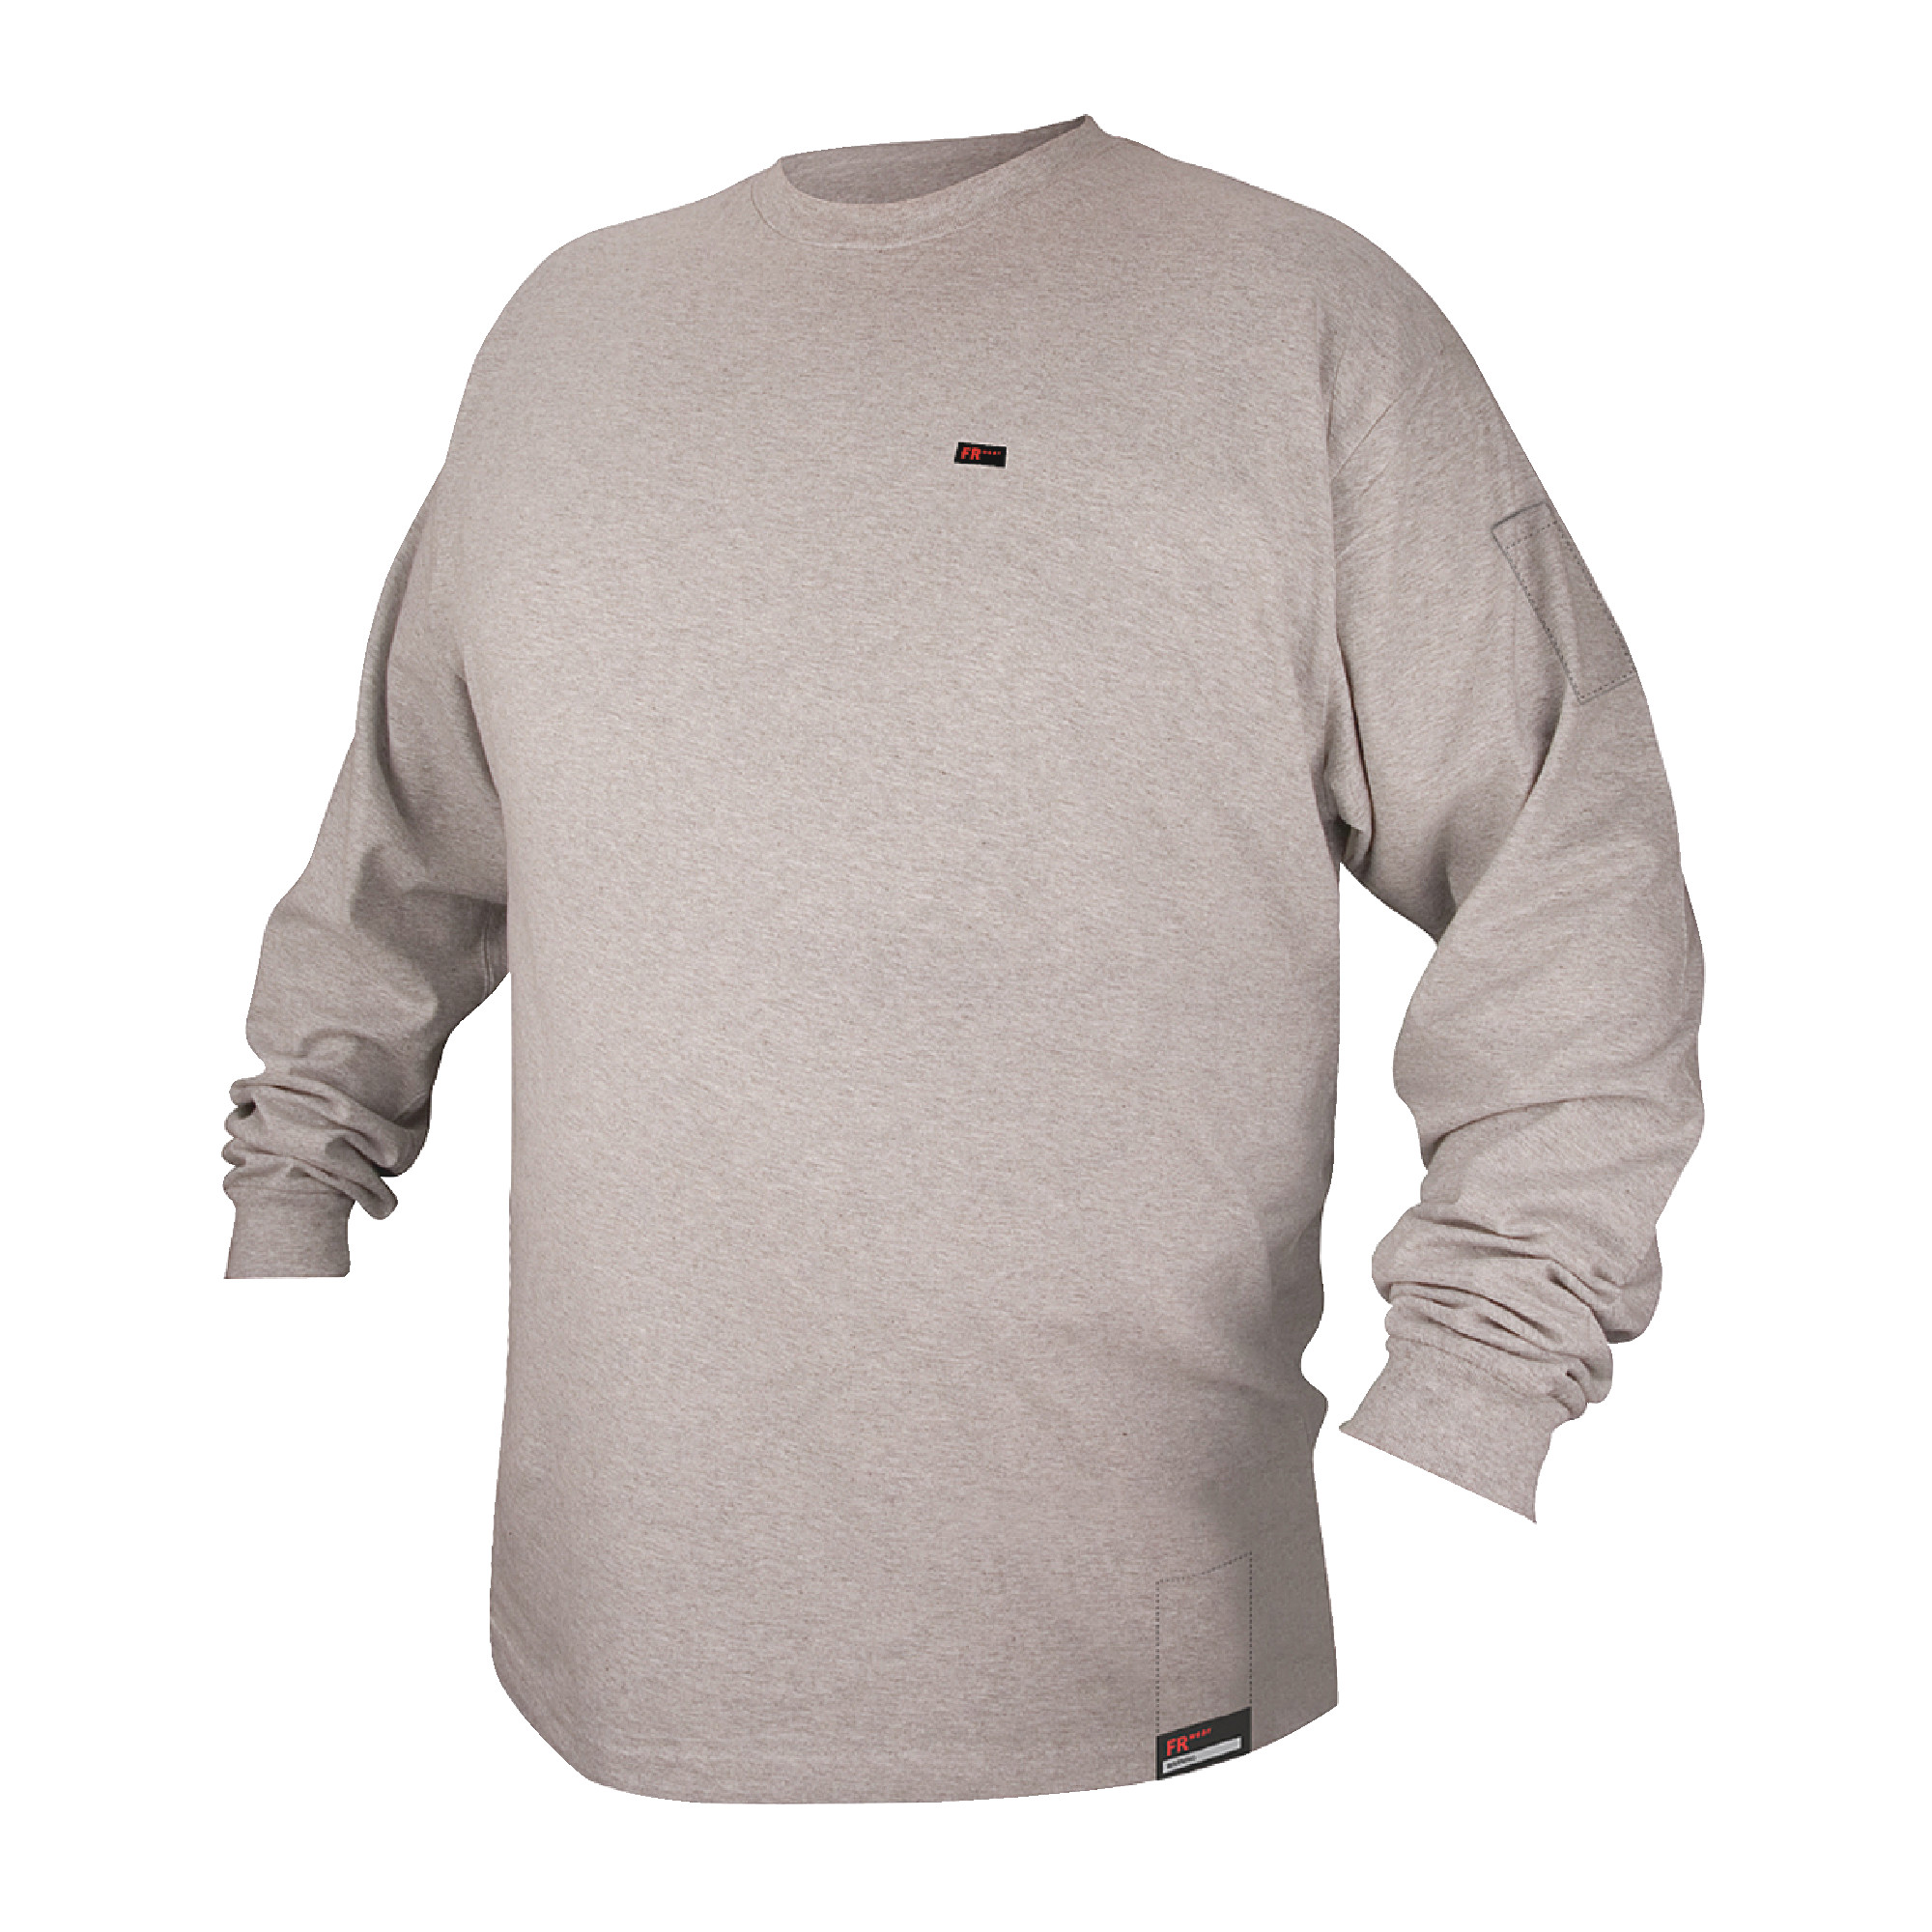 Black Stallion Gray Long Sleeve Flame Resistant Welding T-Shirt - Size XL